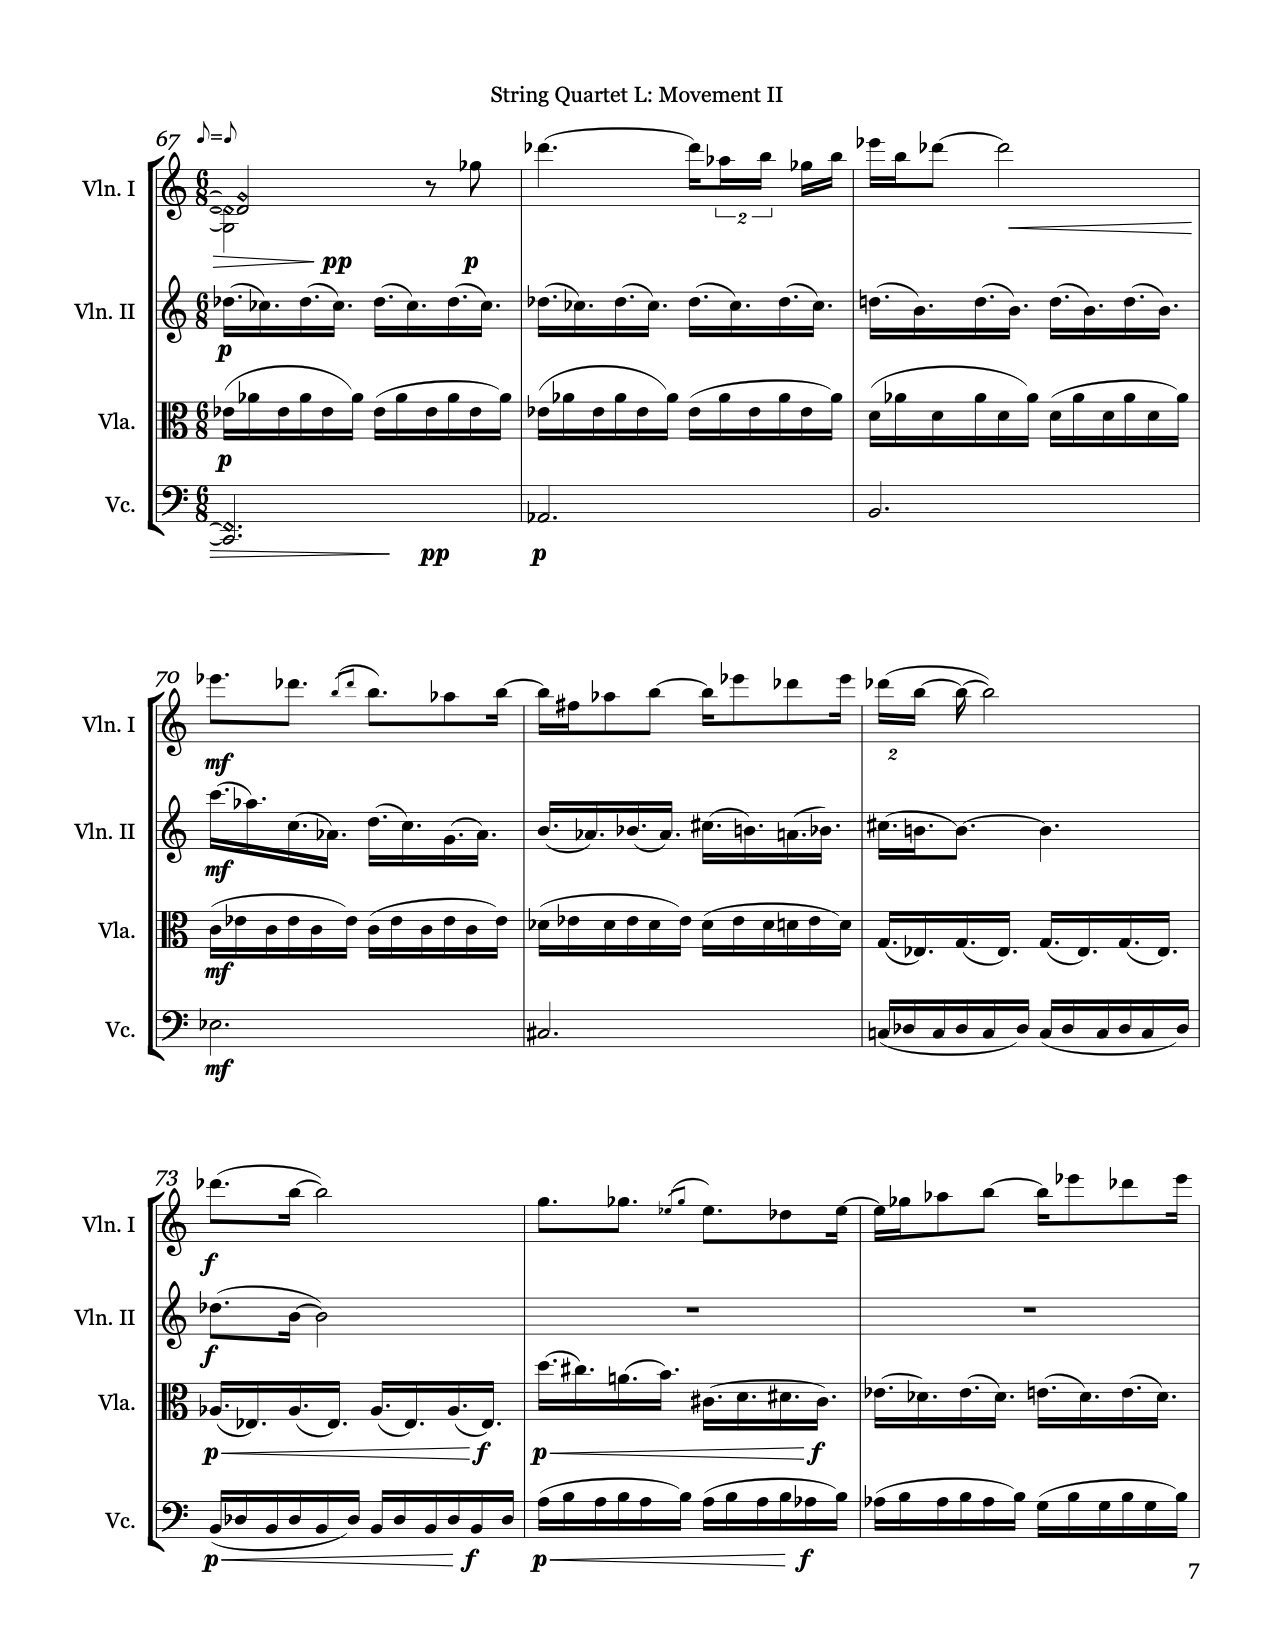 String Quartet L 29.jpeg